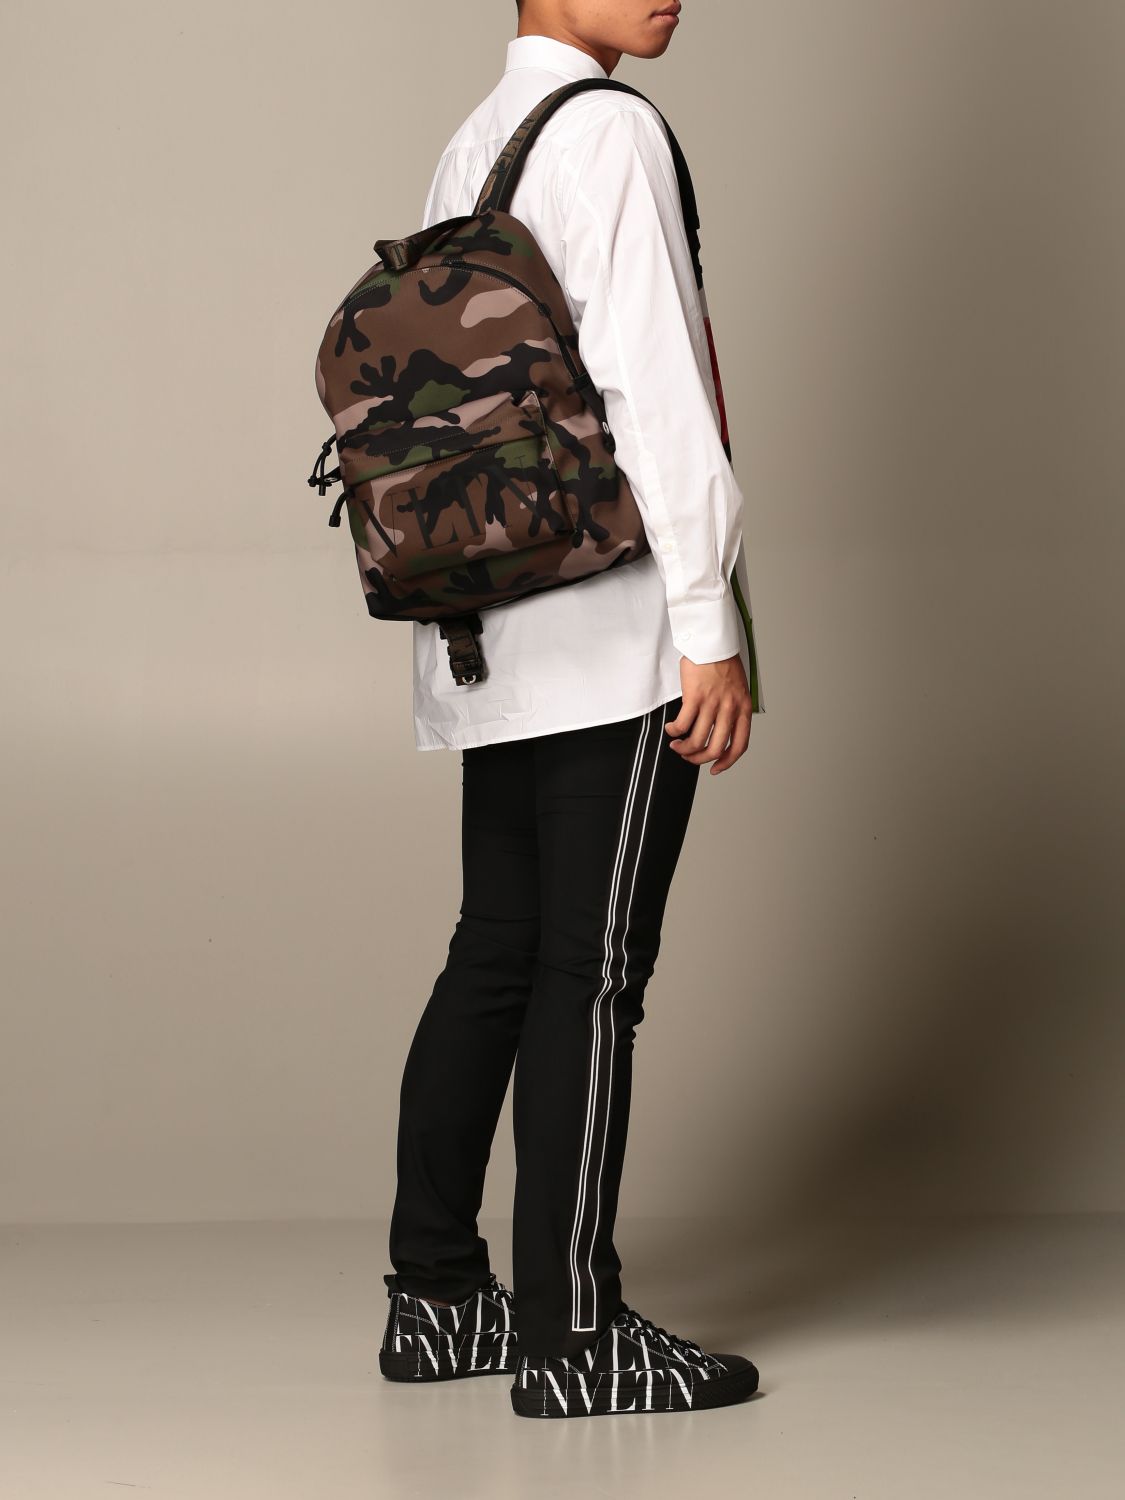 Plante Penneven Balehval VALENTINO GARAVANI: backpack in camouflage nylon with VLTN logo - Military  | Valentino Garavani backpack UY2B0993 PSQ online on GIGLIO.COM